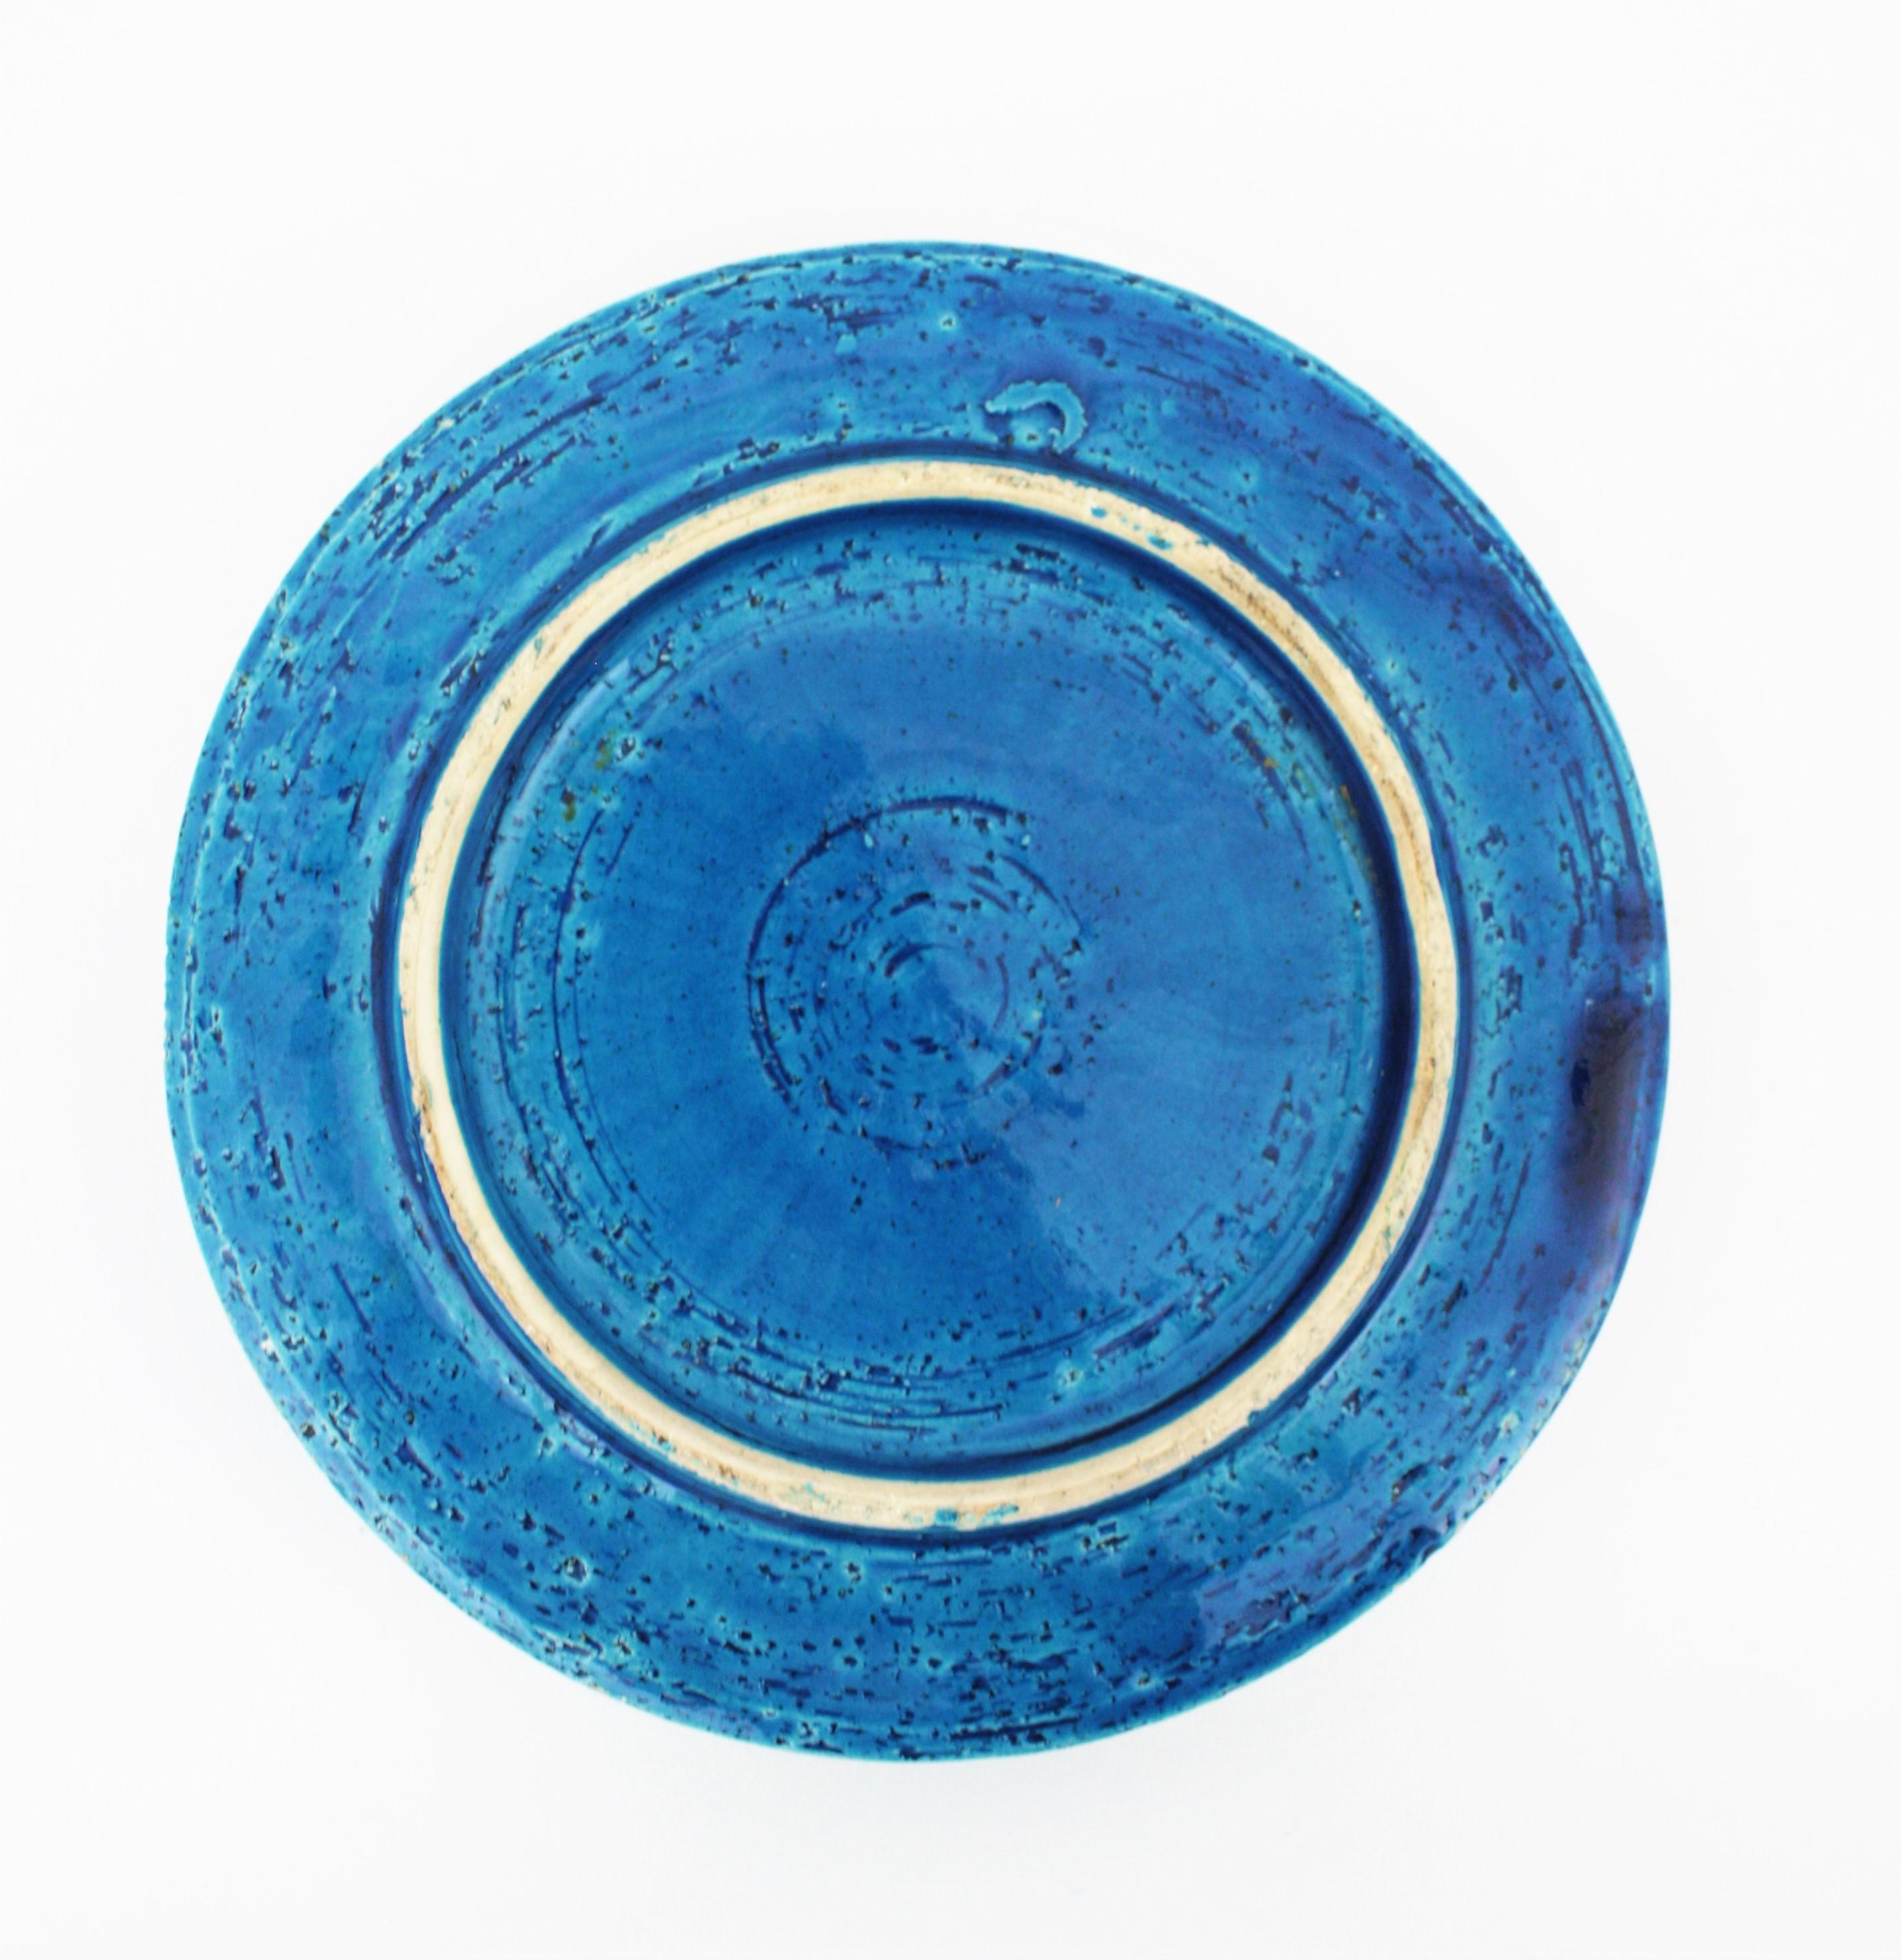 Bitossi Aldo Londi Rimini Blue Glazed Ceramic Circular Bowl, Italy, 1950s In Good Condition For Sale In Barcelona, ES